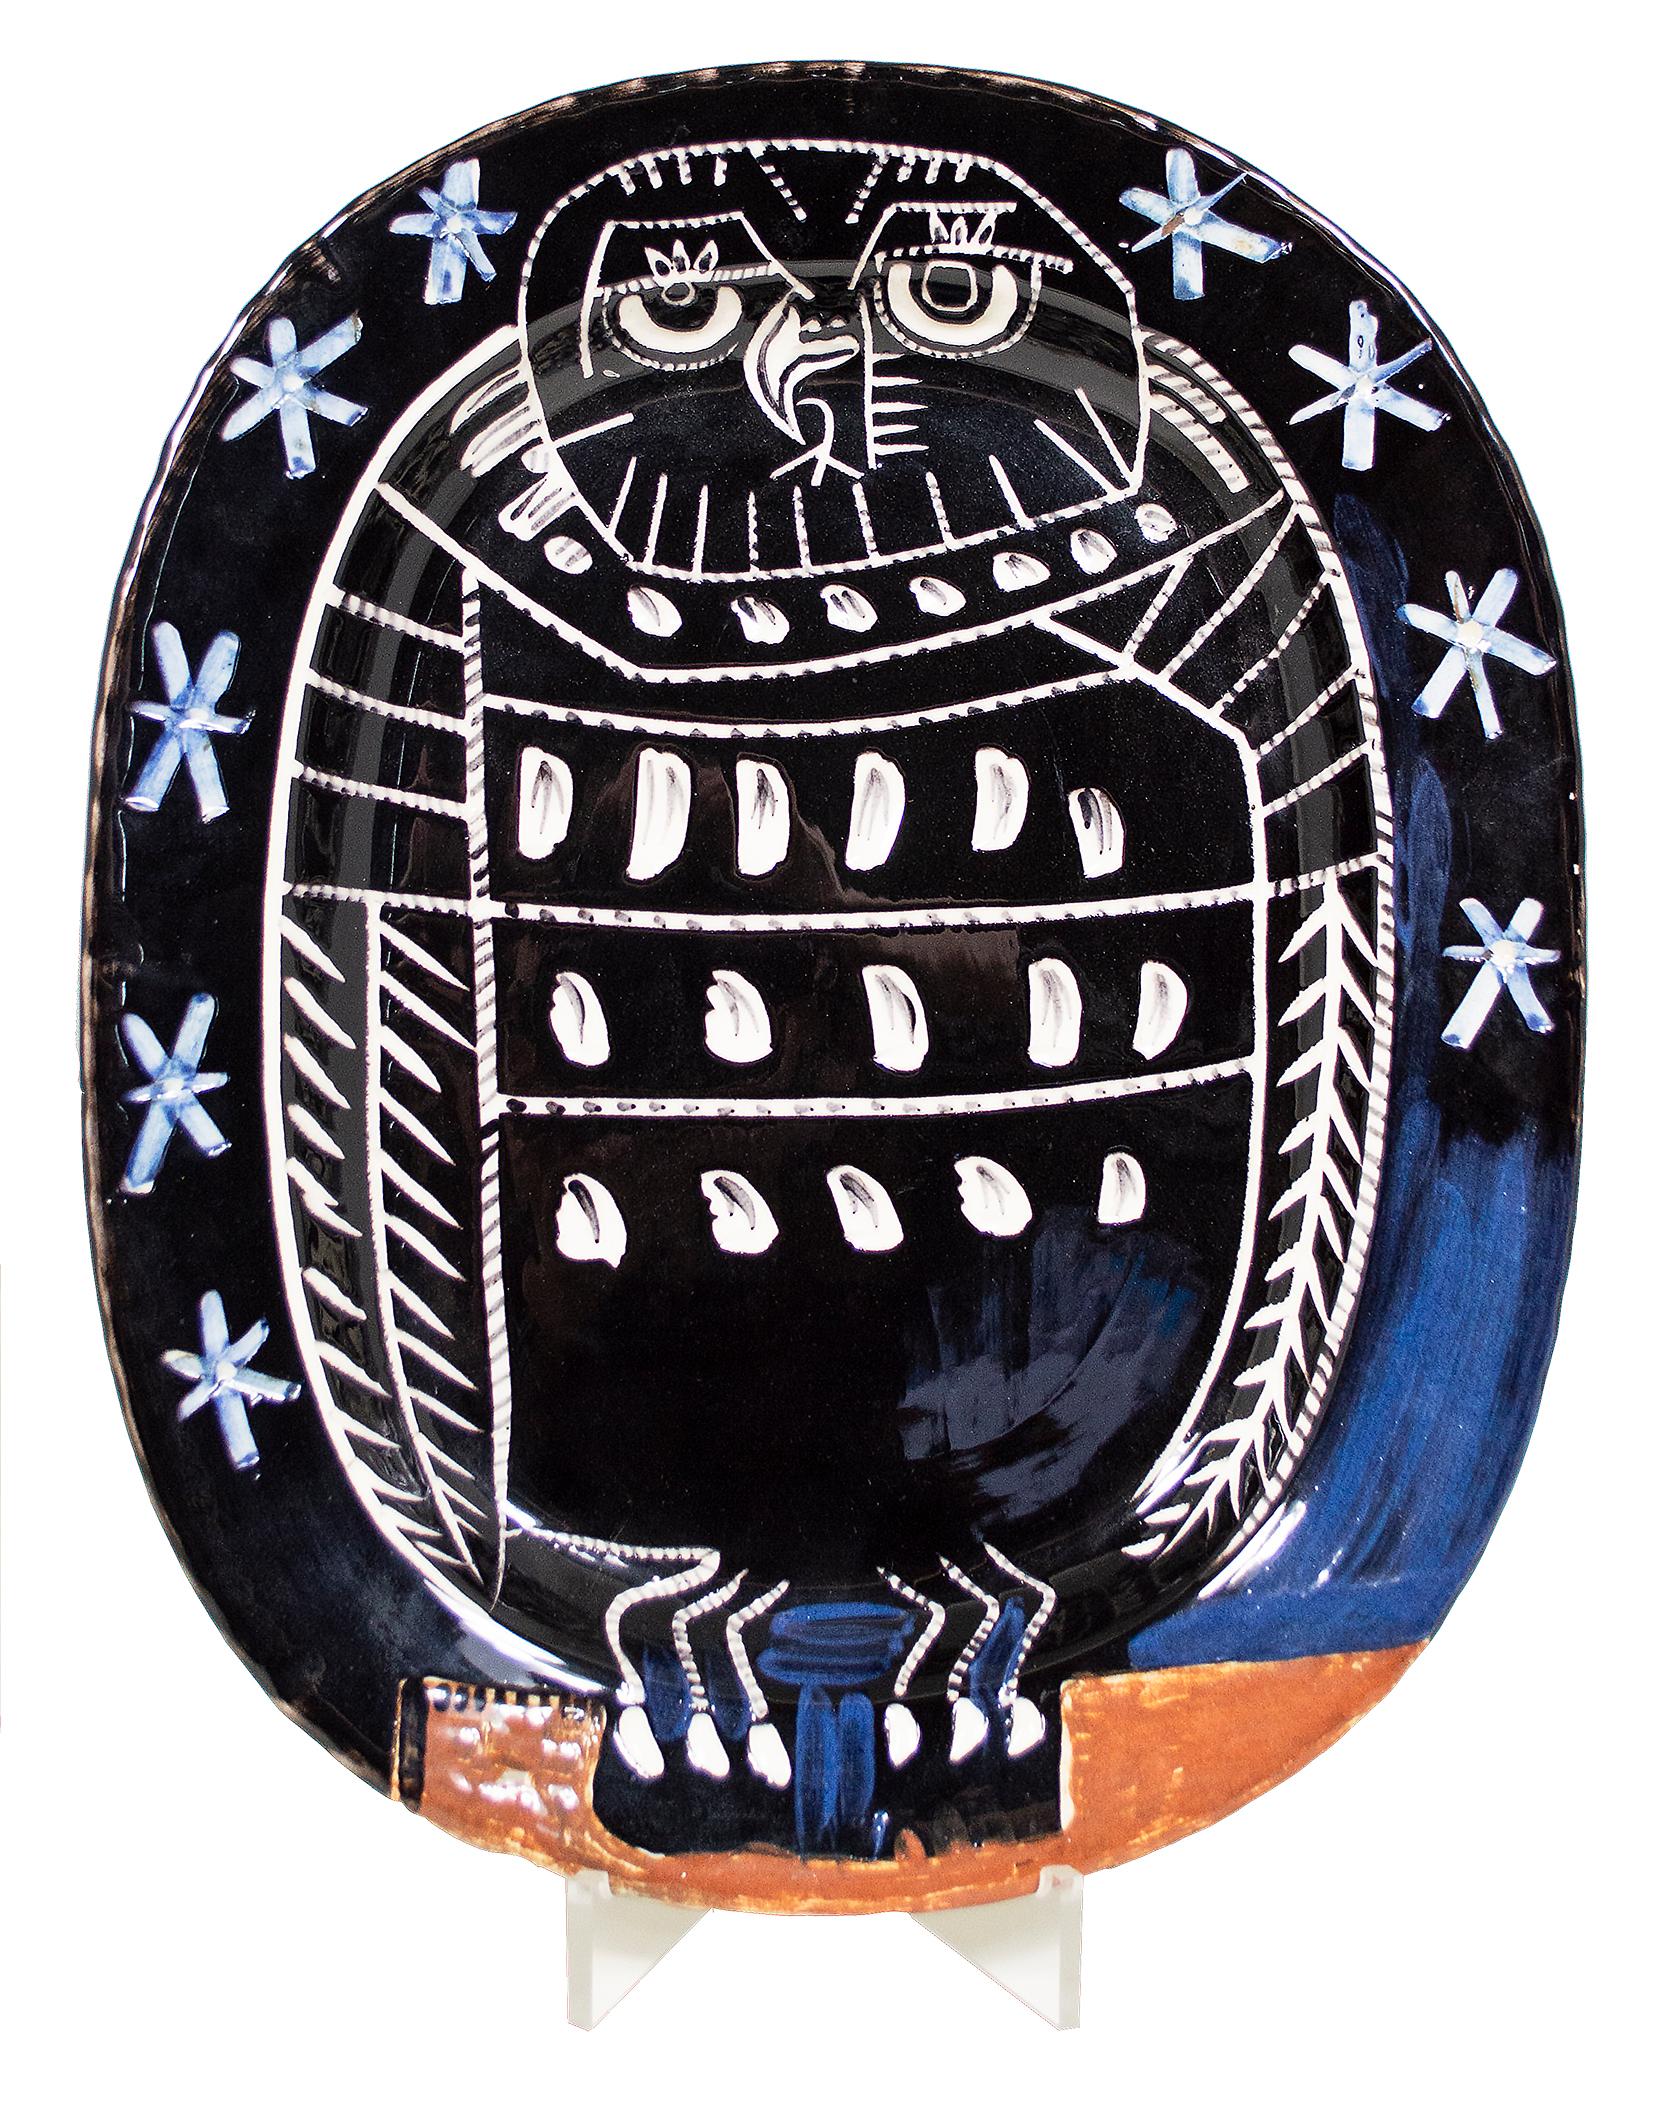 Originale rechteckige Madoura-Keramik-Platte „Bright Owl“ aus Madoura, Edition Picasso